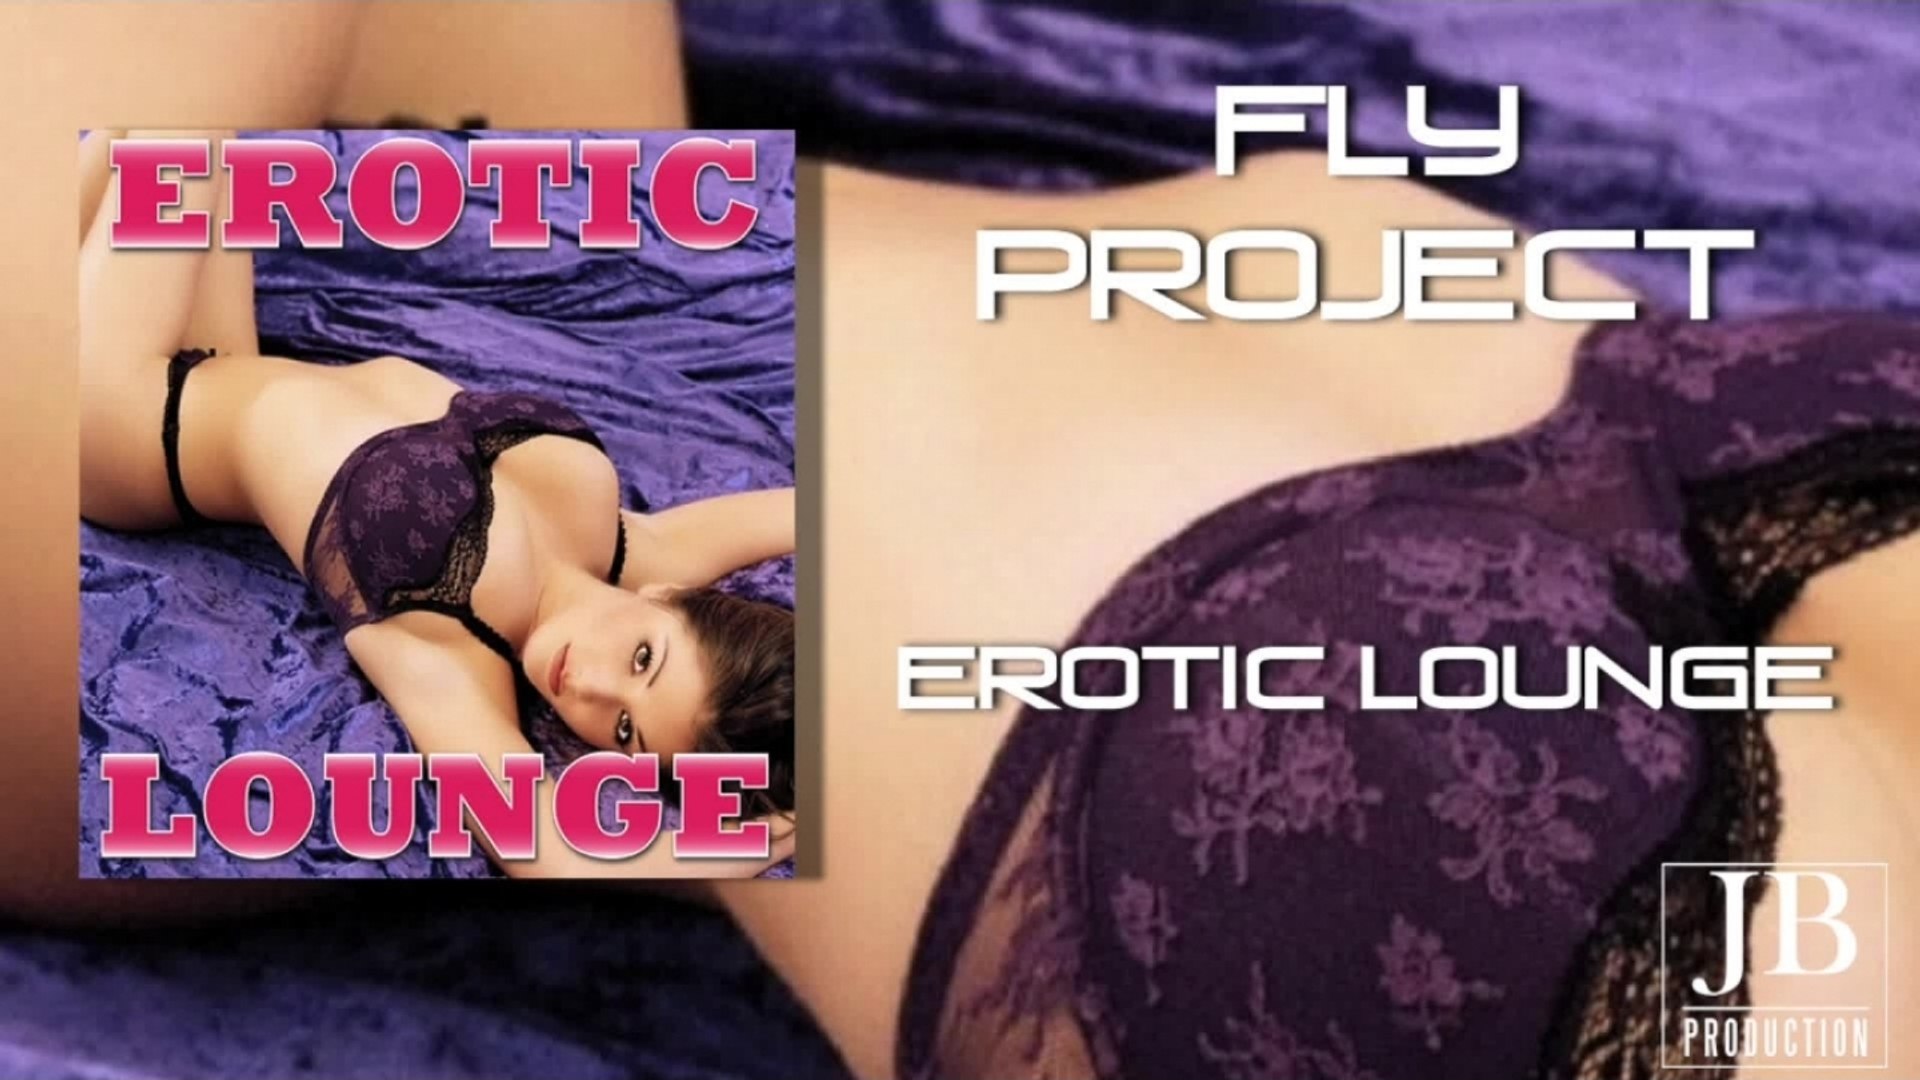 Erotic fly